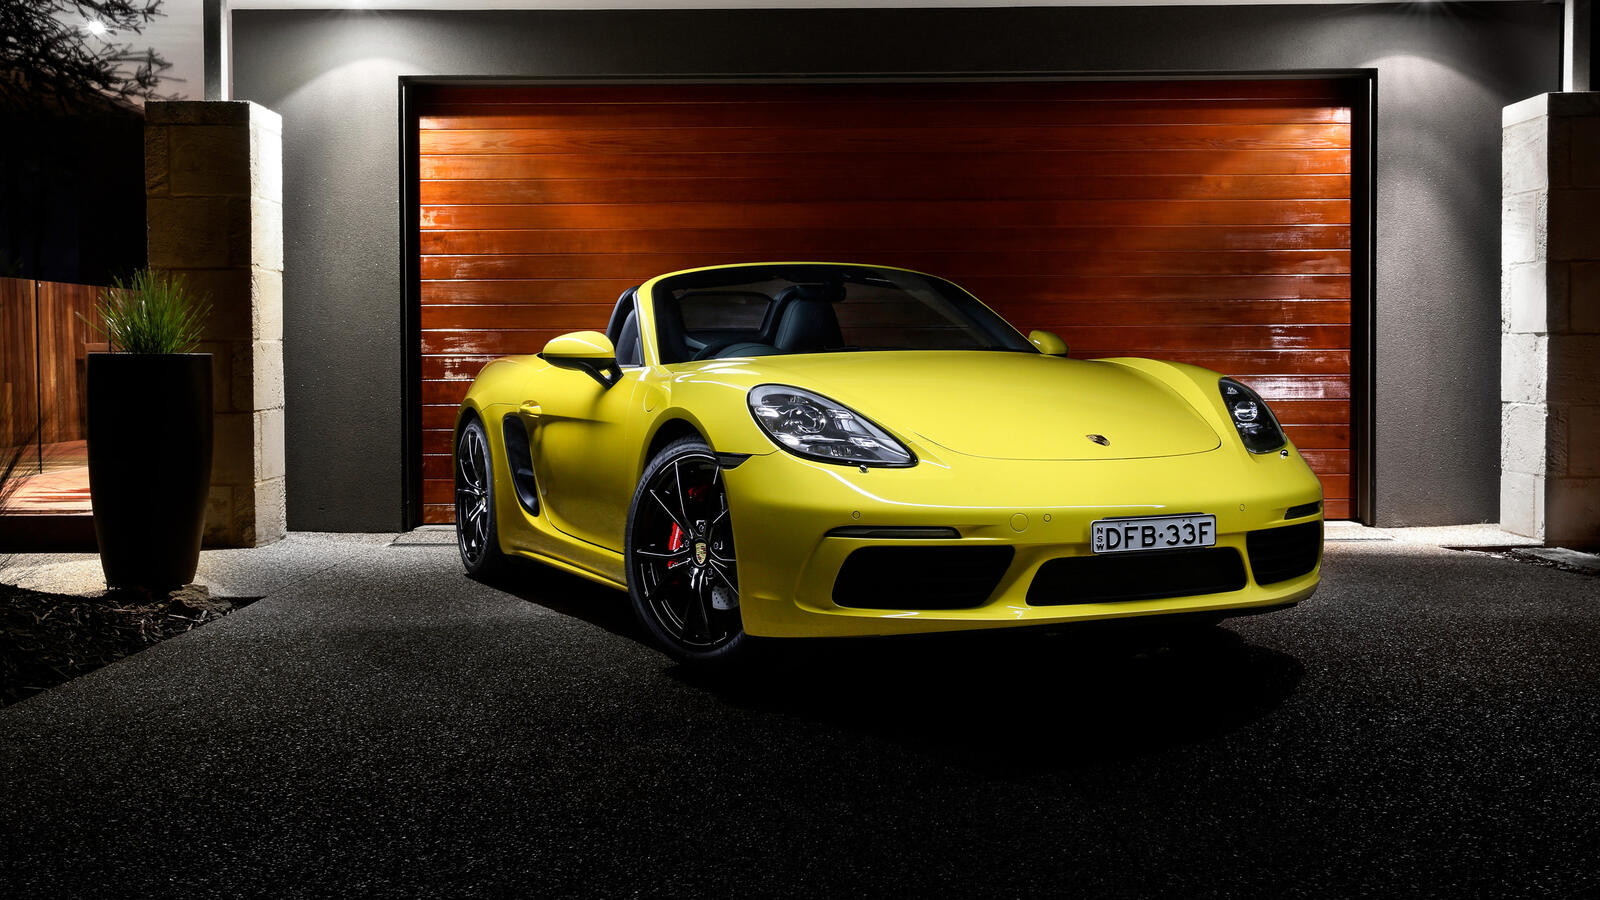 Бесплатное фото Желтый Porsche Boxster